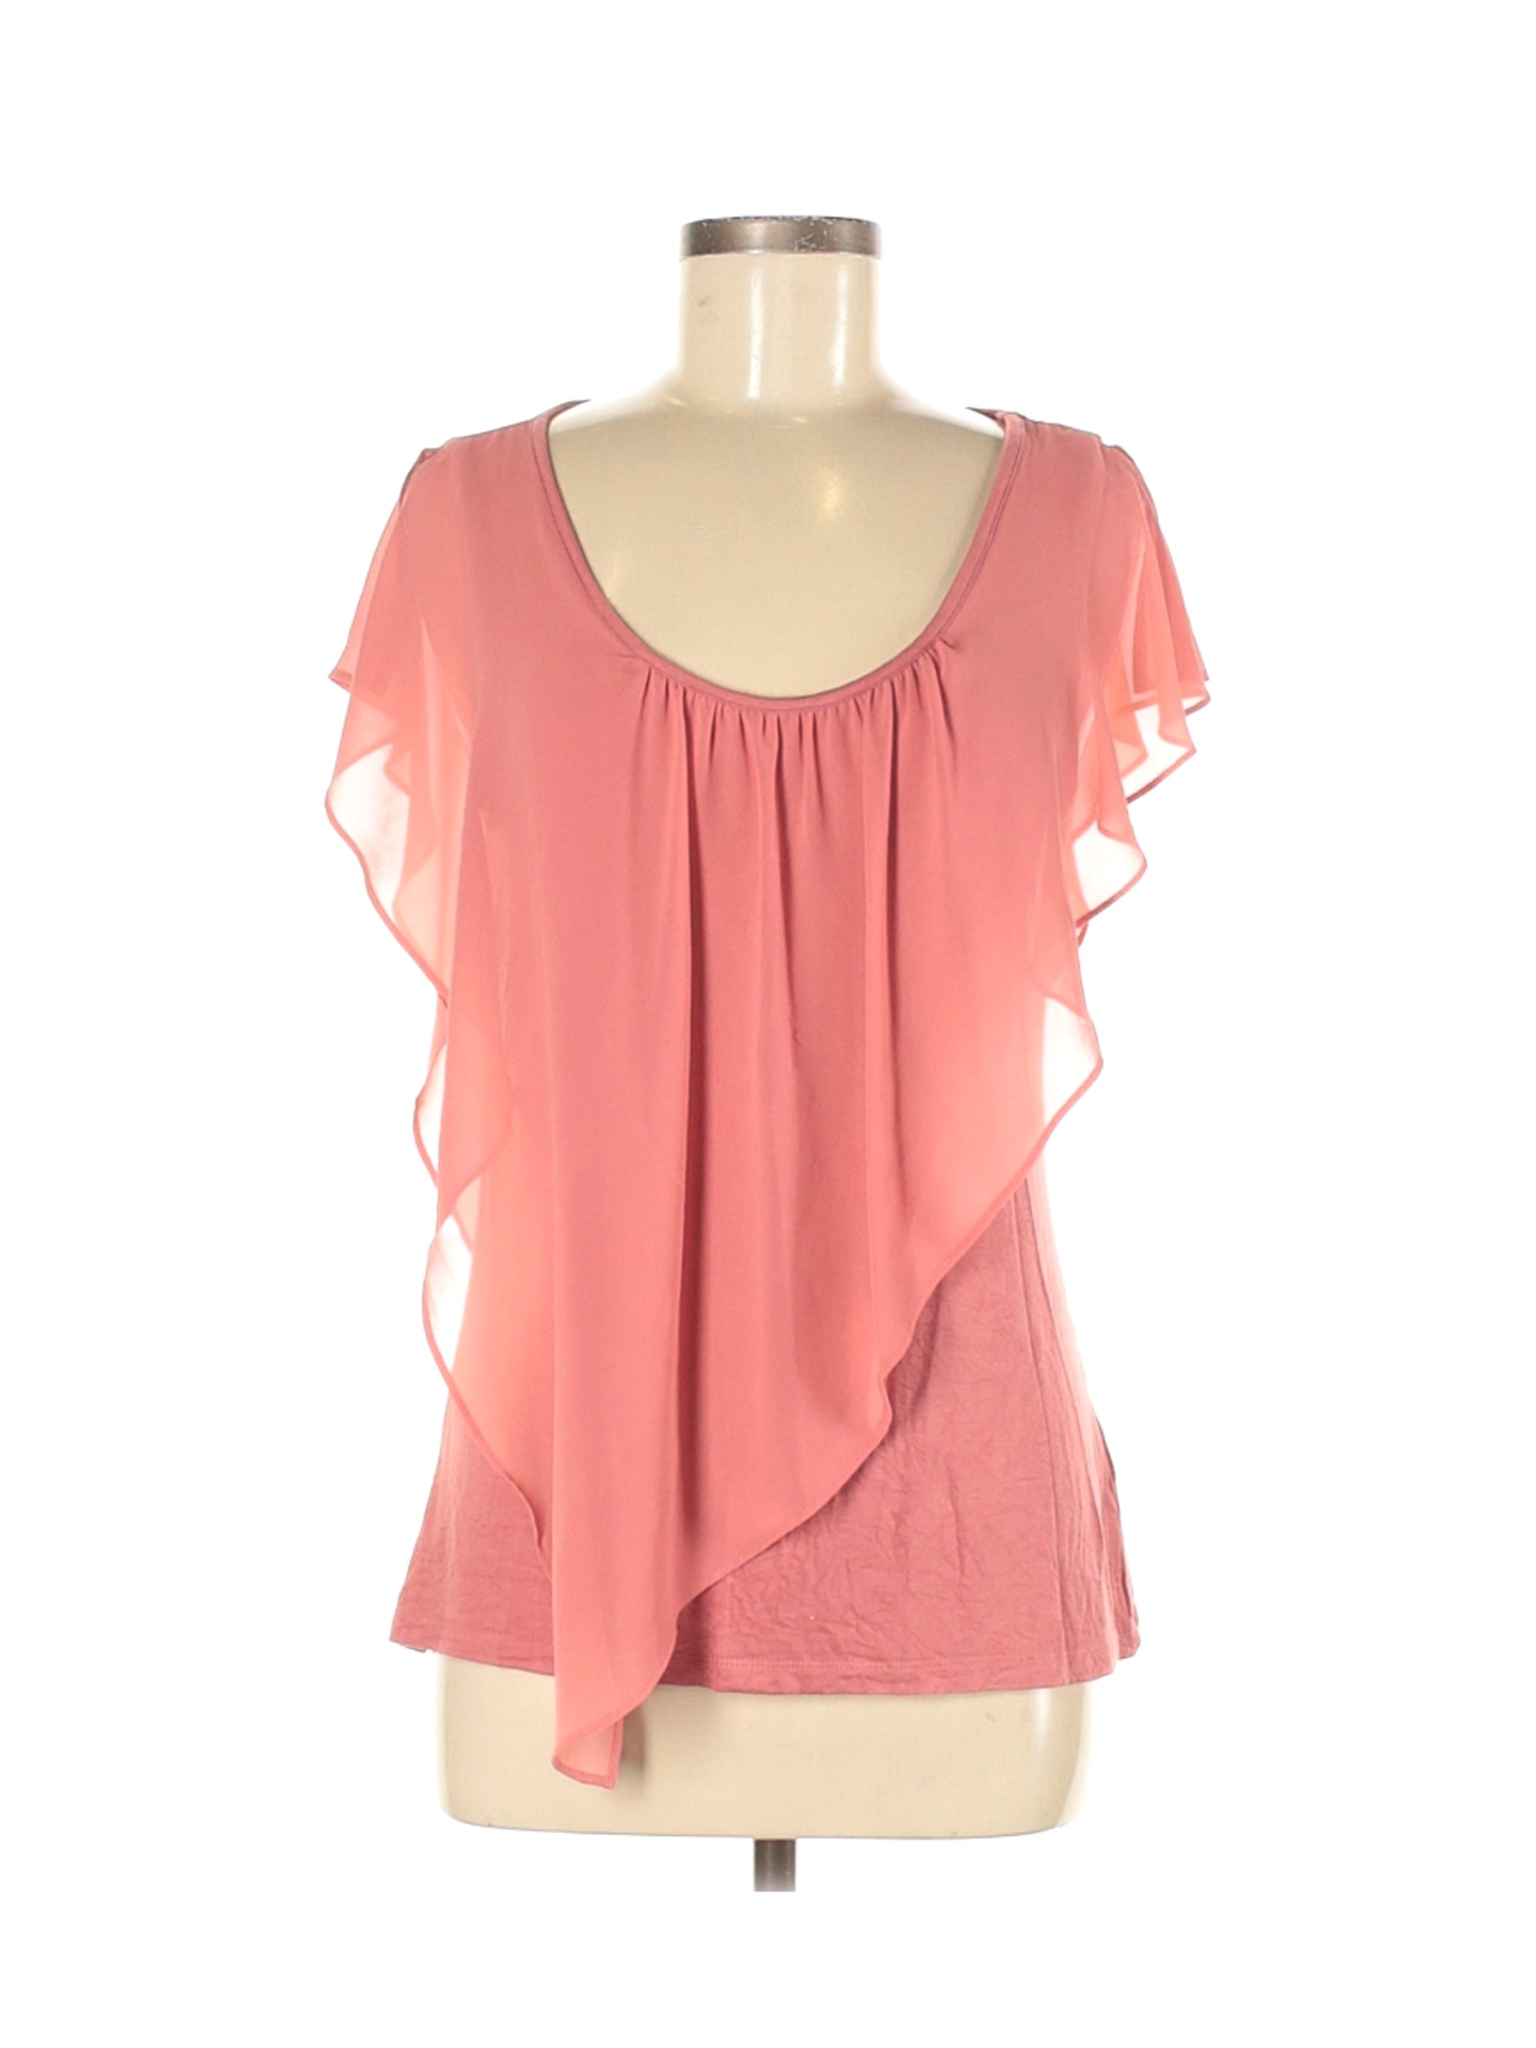 Maurices Women Pink Short Sleeve Top M | eBay